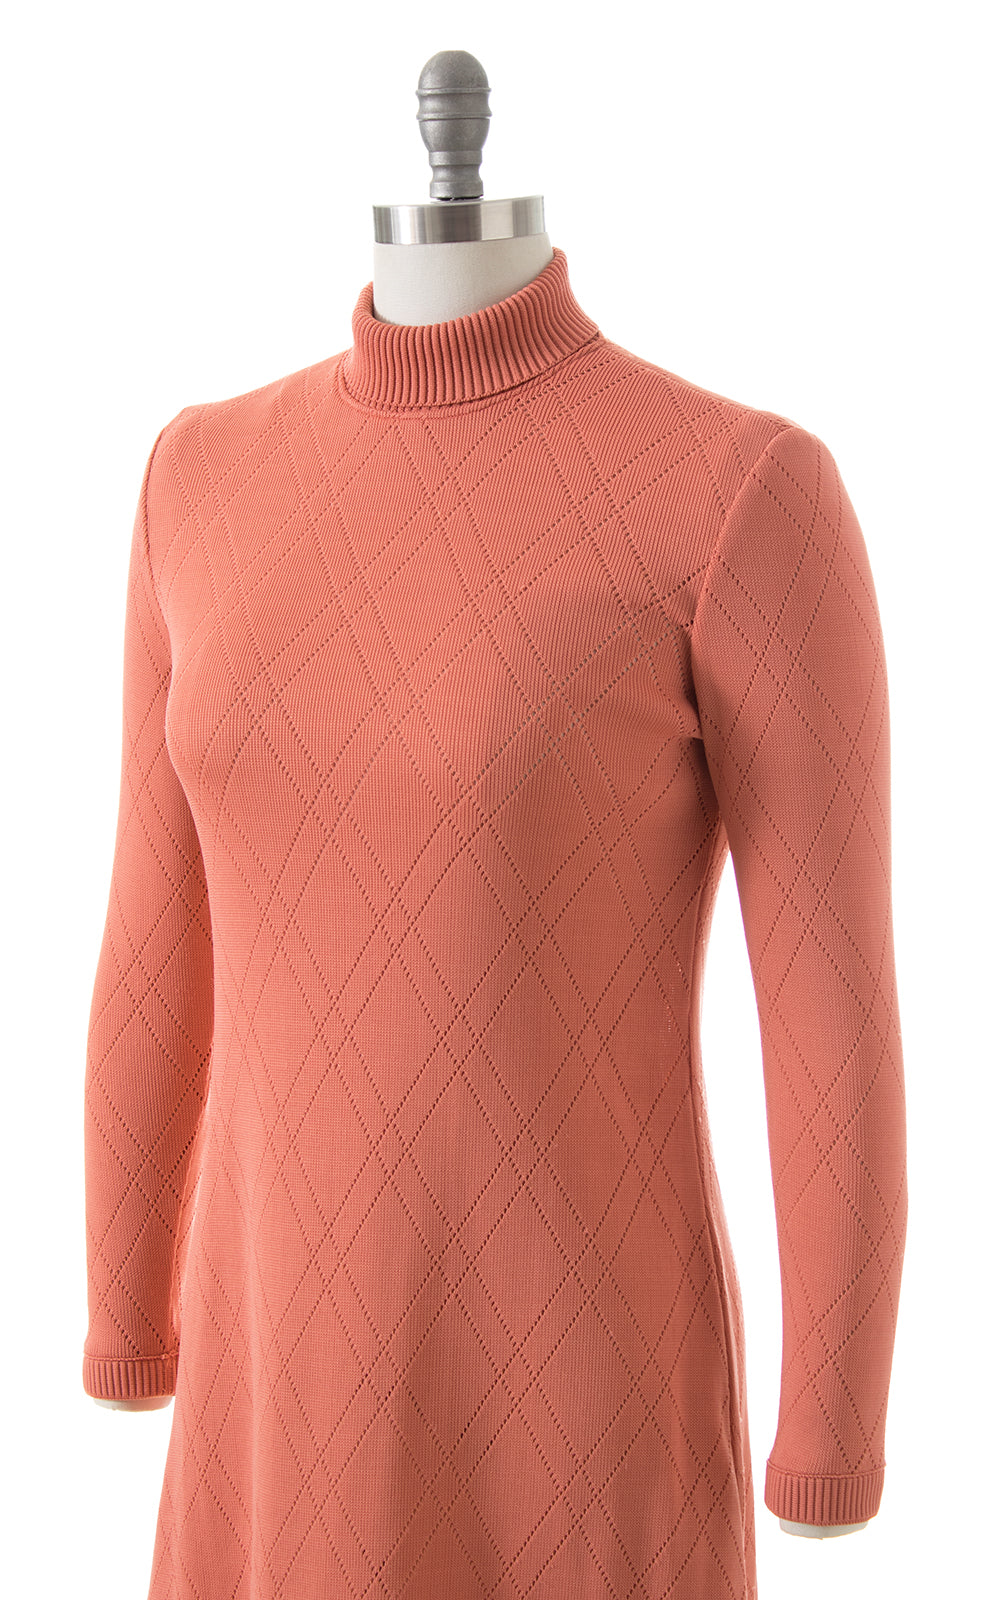 1970s Knit Turtleneck Sweater Dress